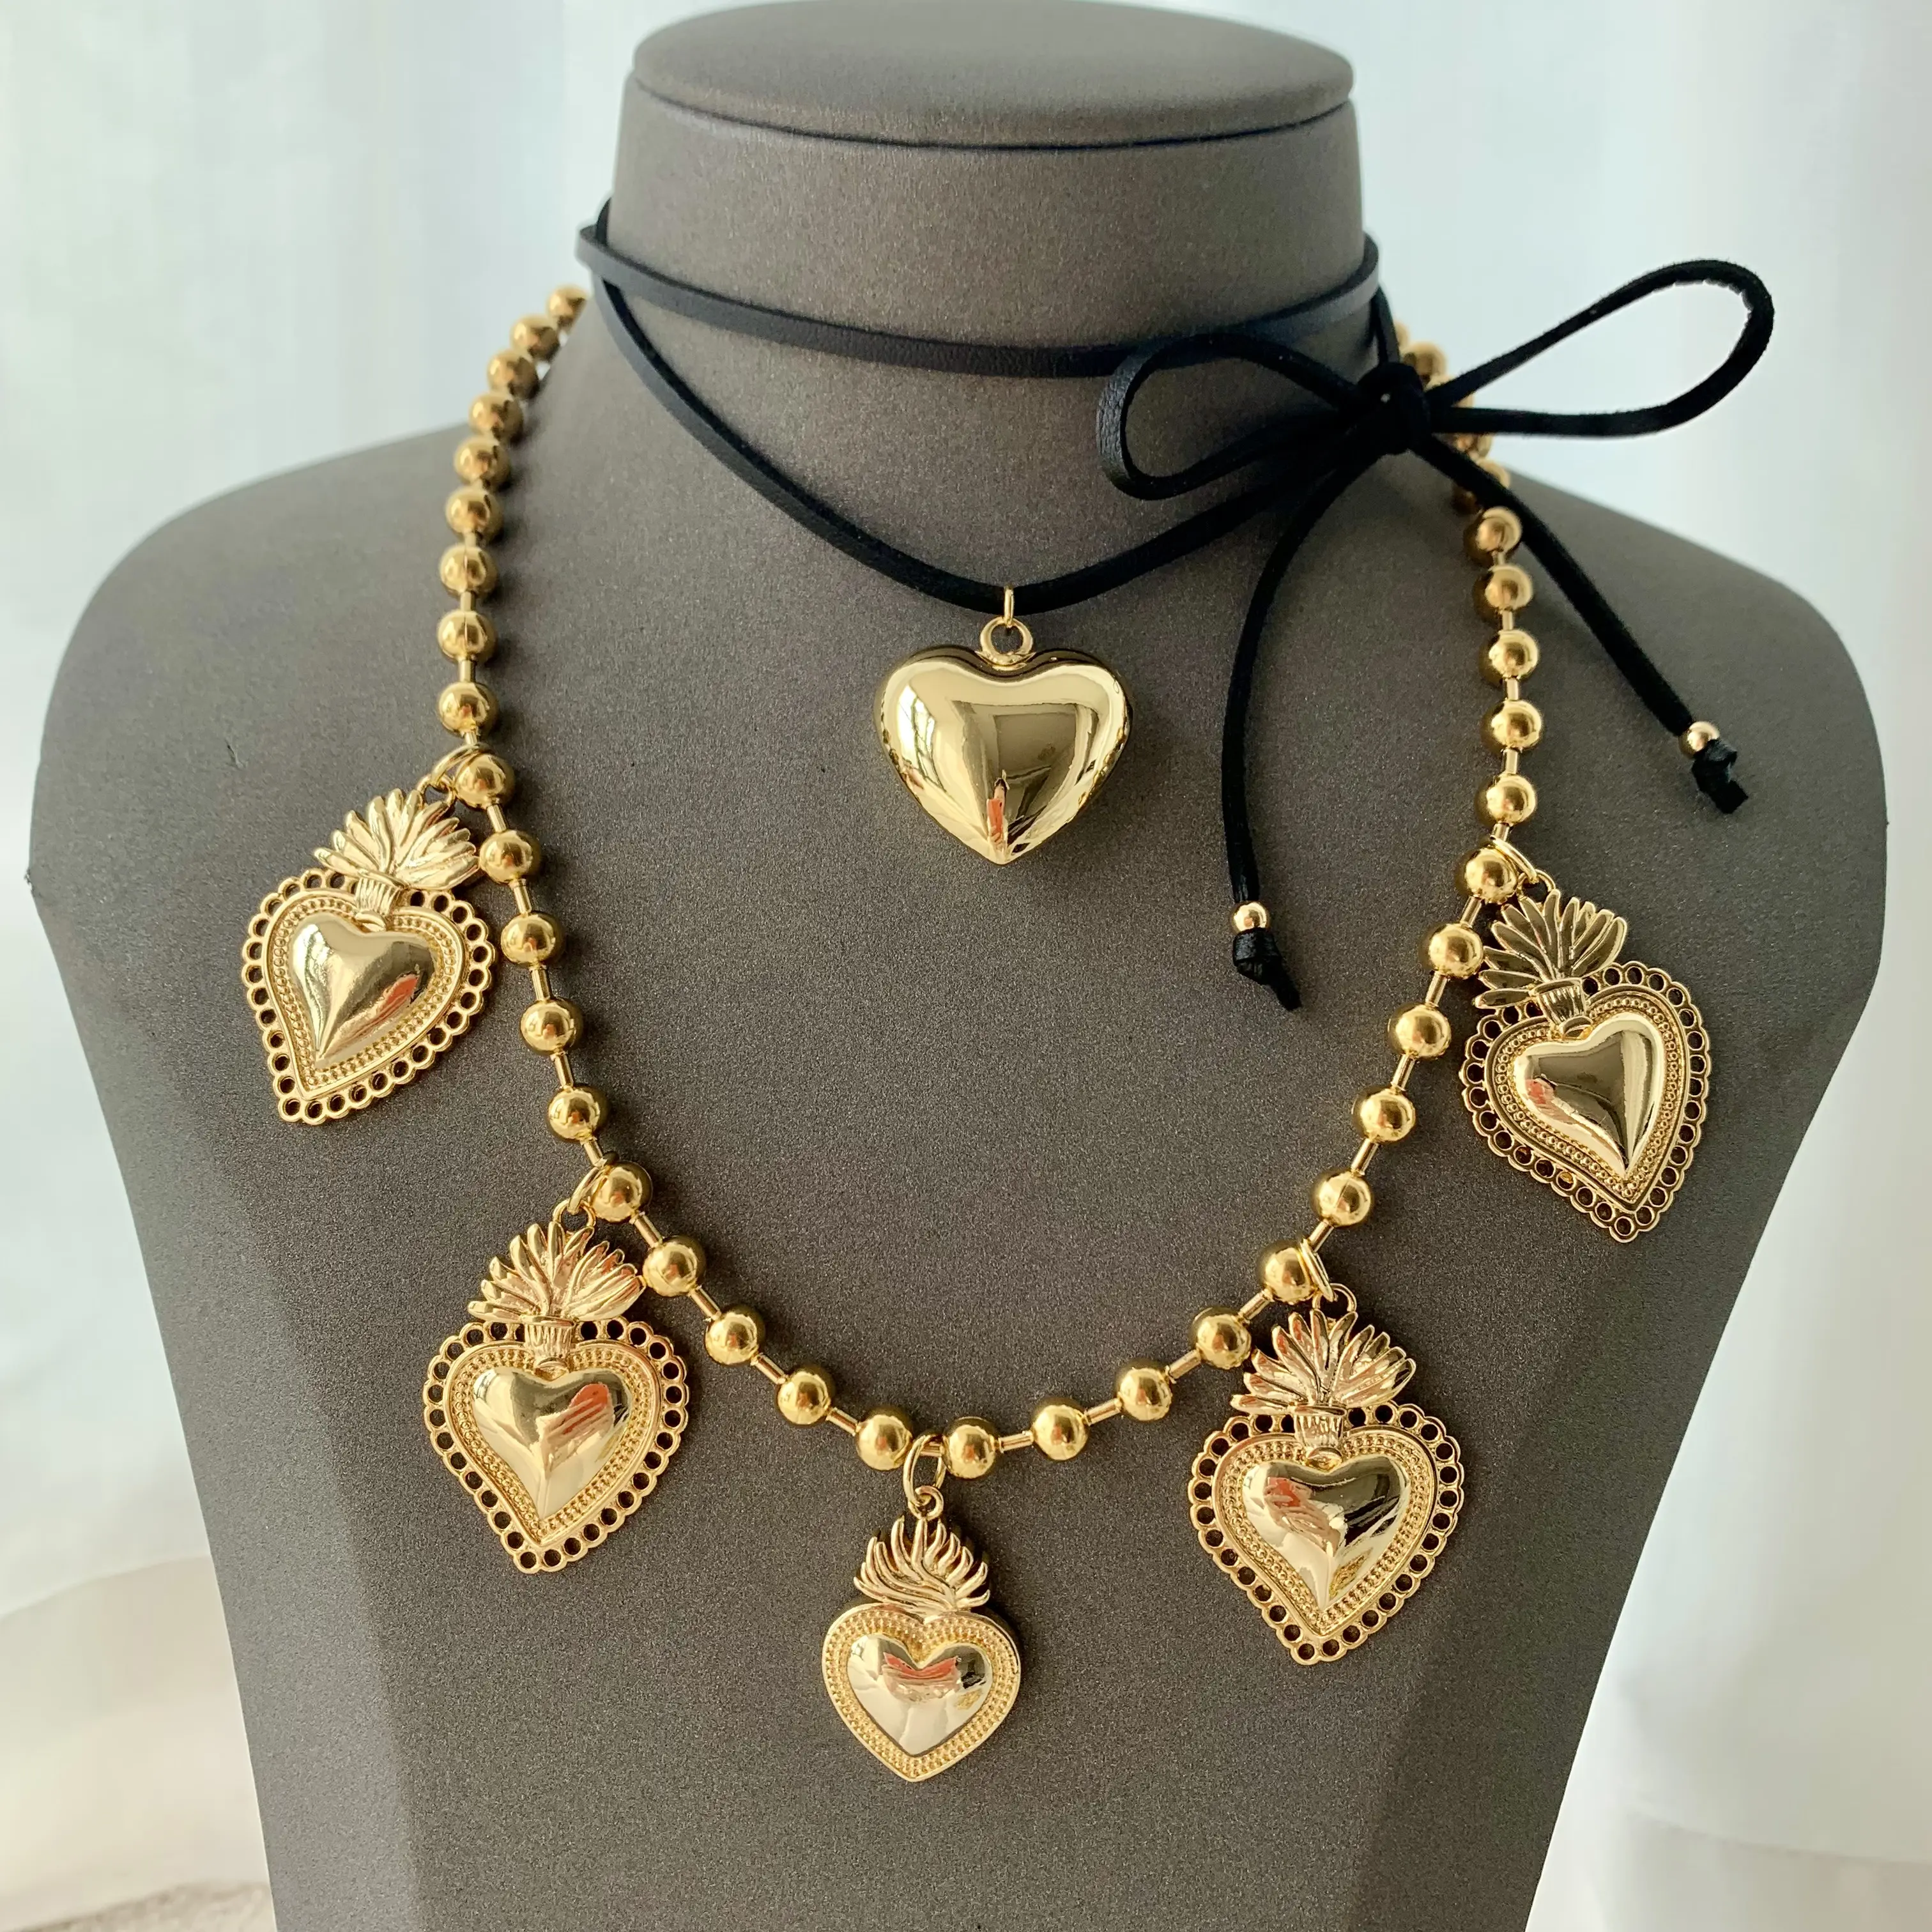 BD-L3164 Nova moda colar de couro feminino delicado joia corrente de ouro colar multi corações moda colar